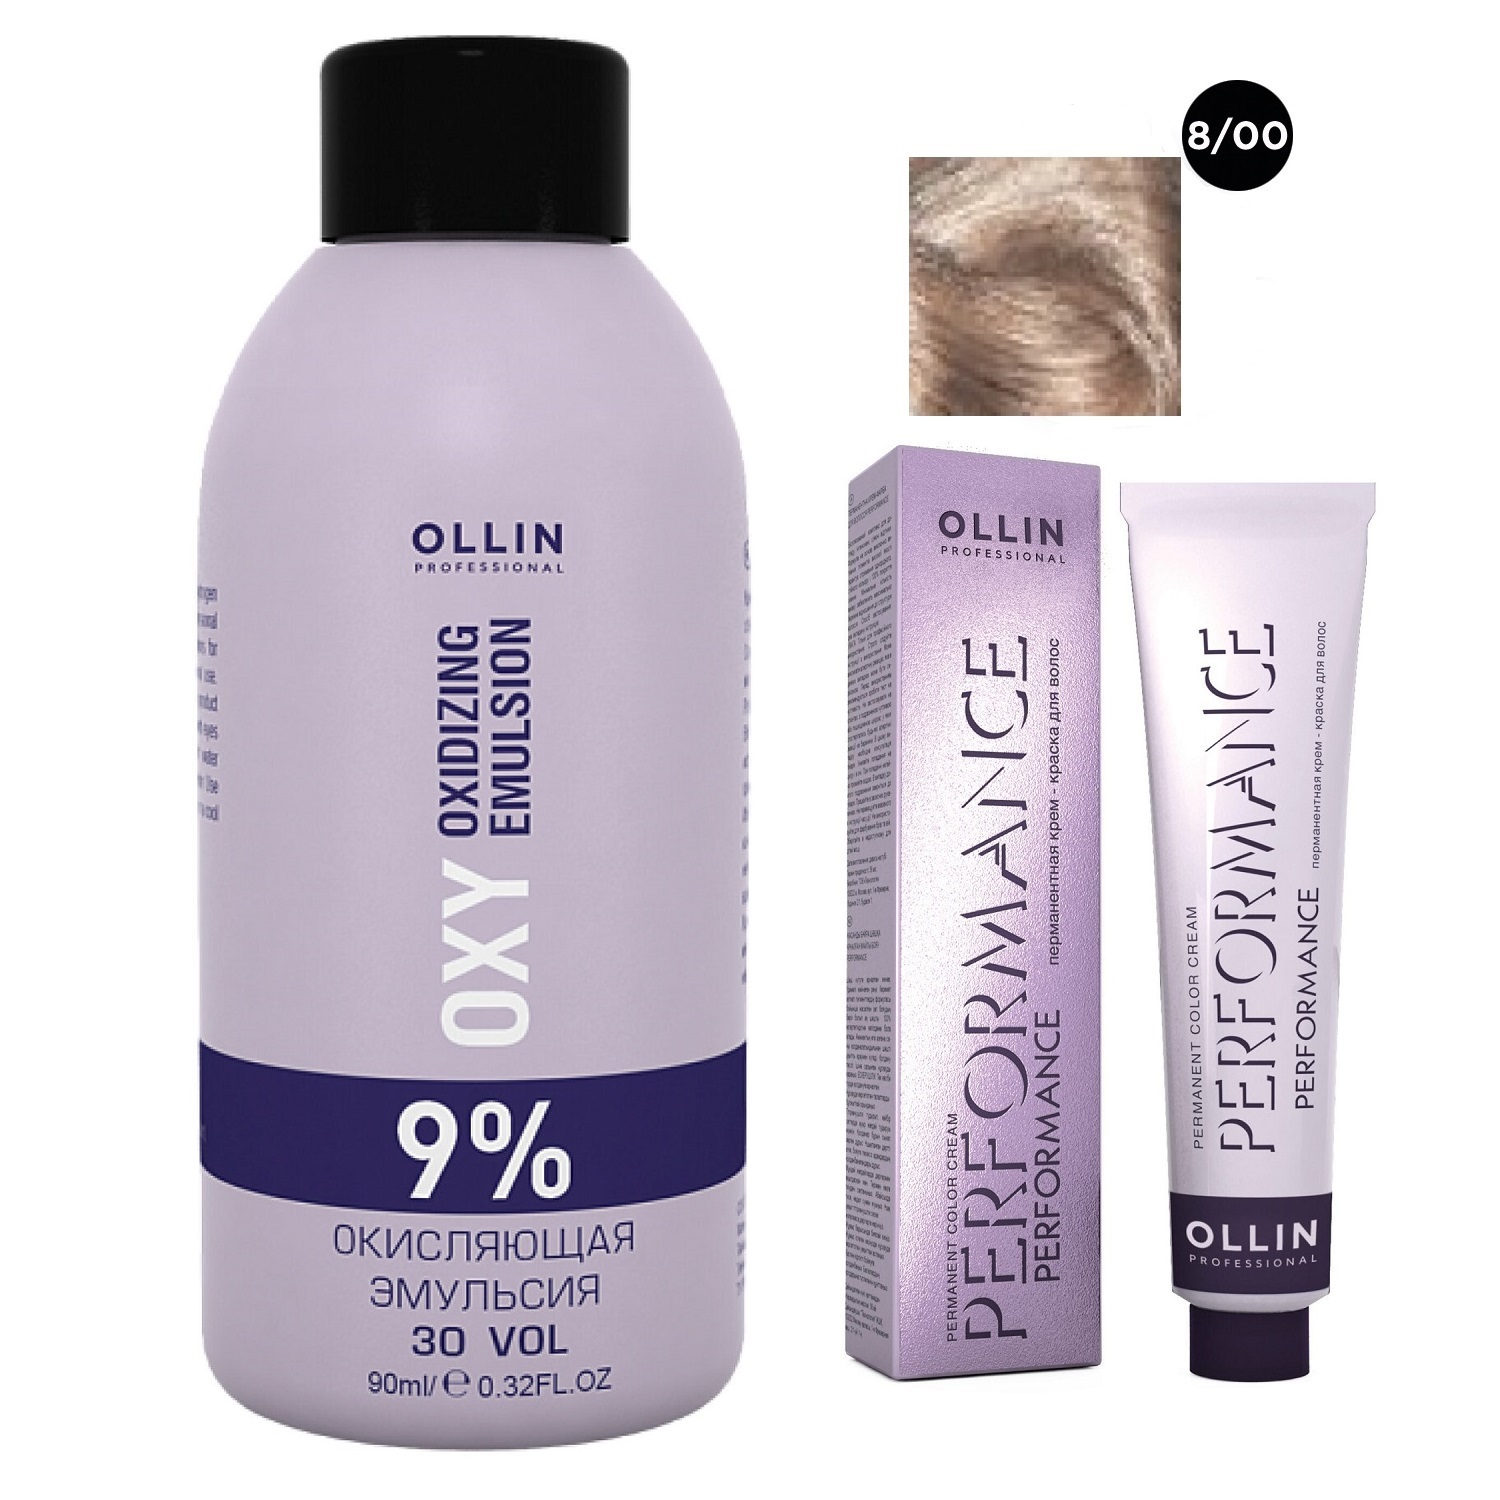 Ollin Professional Набор Перманентная крем-краска для волос Ollin Performance оттенок 8/00 светло-русый глубокий 60 мл + Окисляющая эмульсия Oxy 9% 90 мл (Ollin Professional, Performance) ollin окисляющая эмульсия 9% 30vol performance oxy 1000 мл